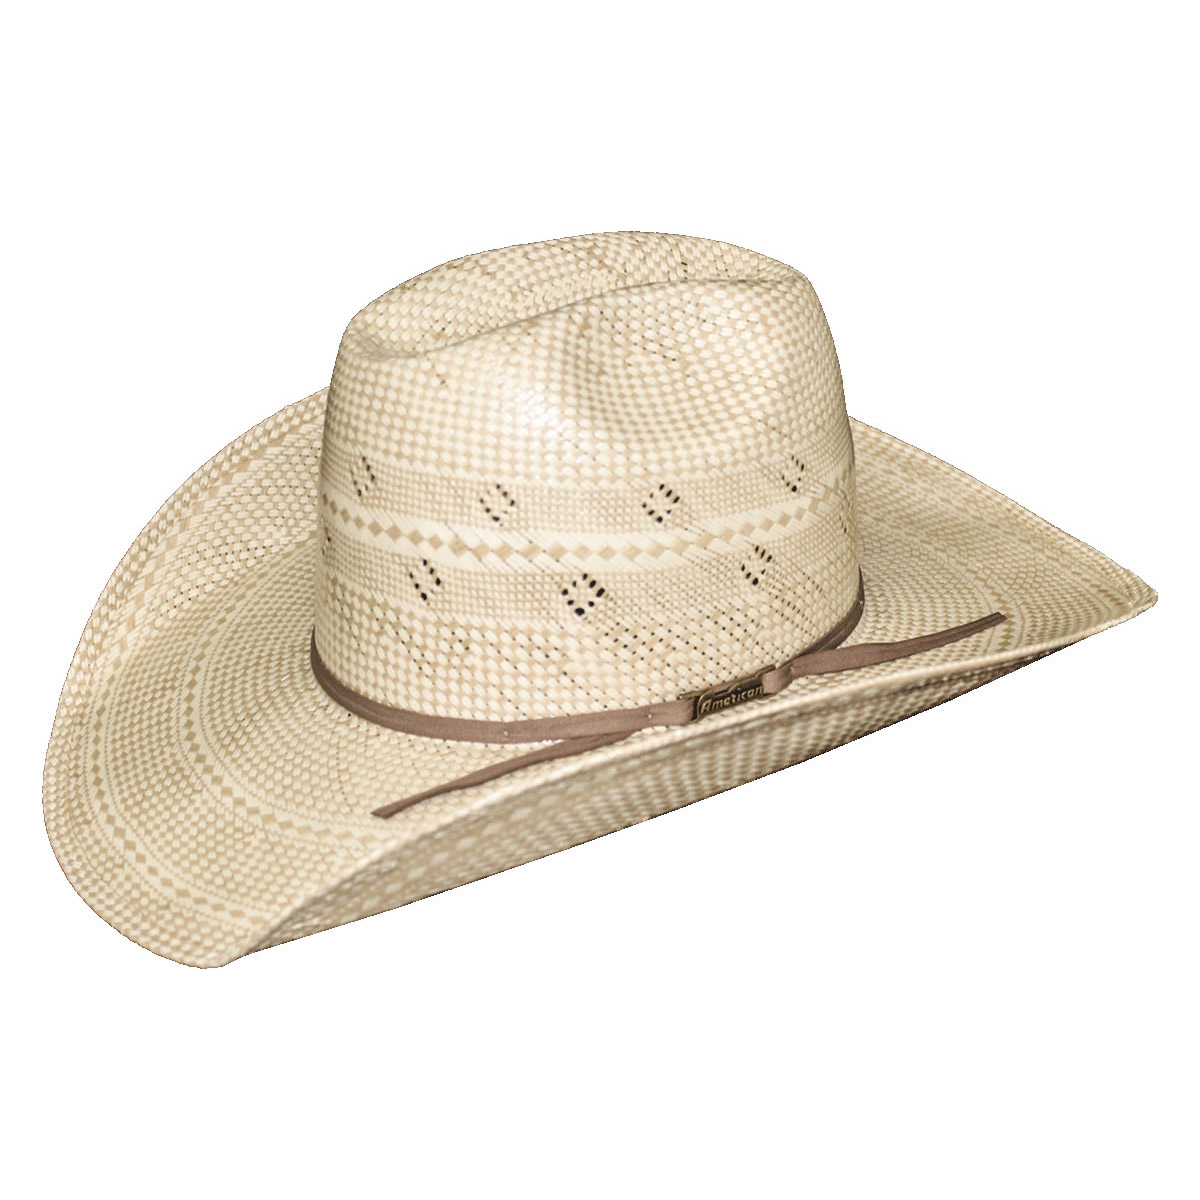 American Hat Company Straw Cowboy Hats 